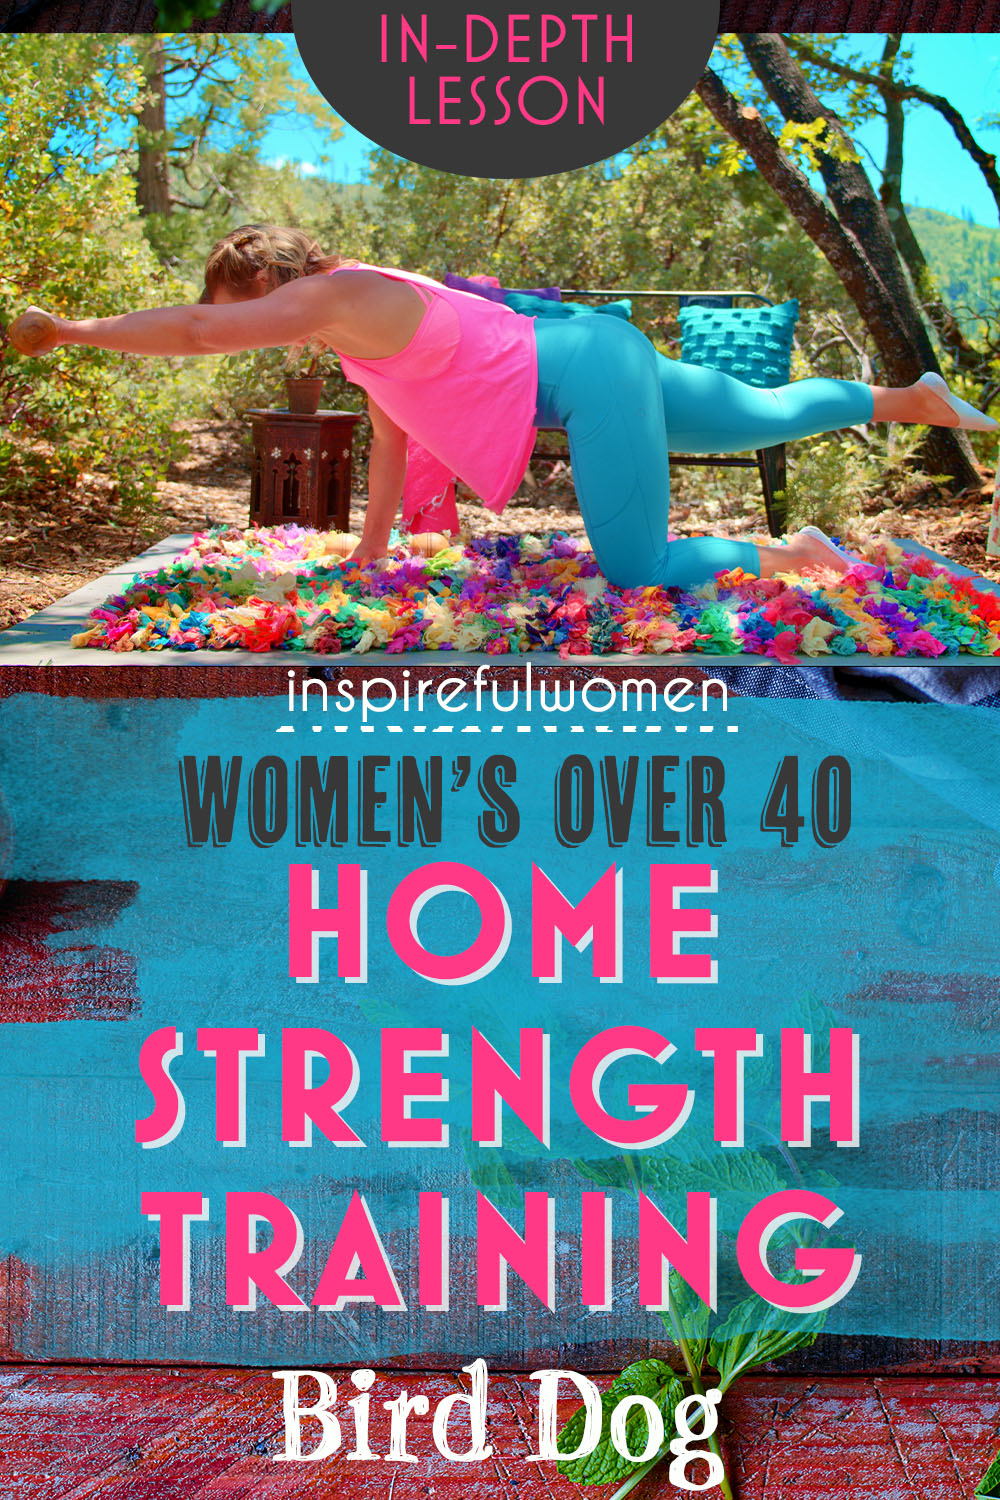 bodyweight-bird-dog-core-exercise-back-extensor-muscles-strength-home-exercise-women-40+